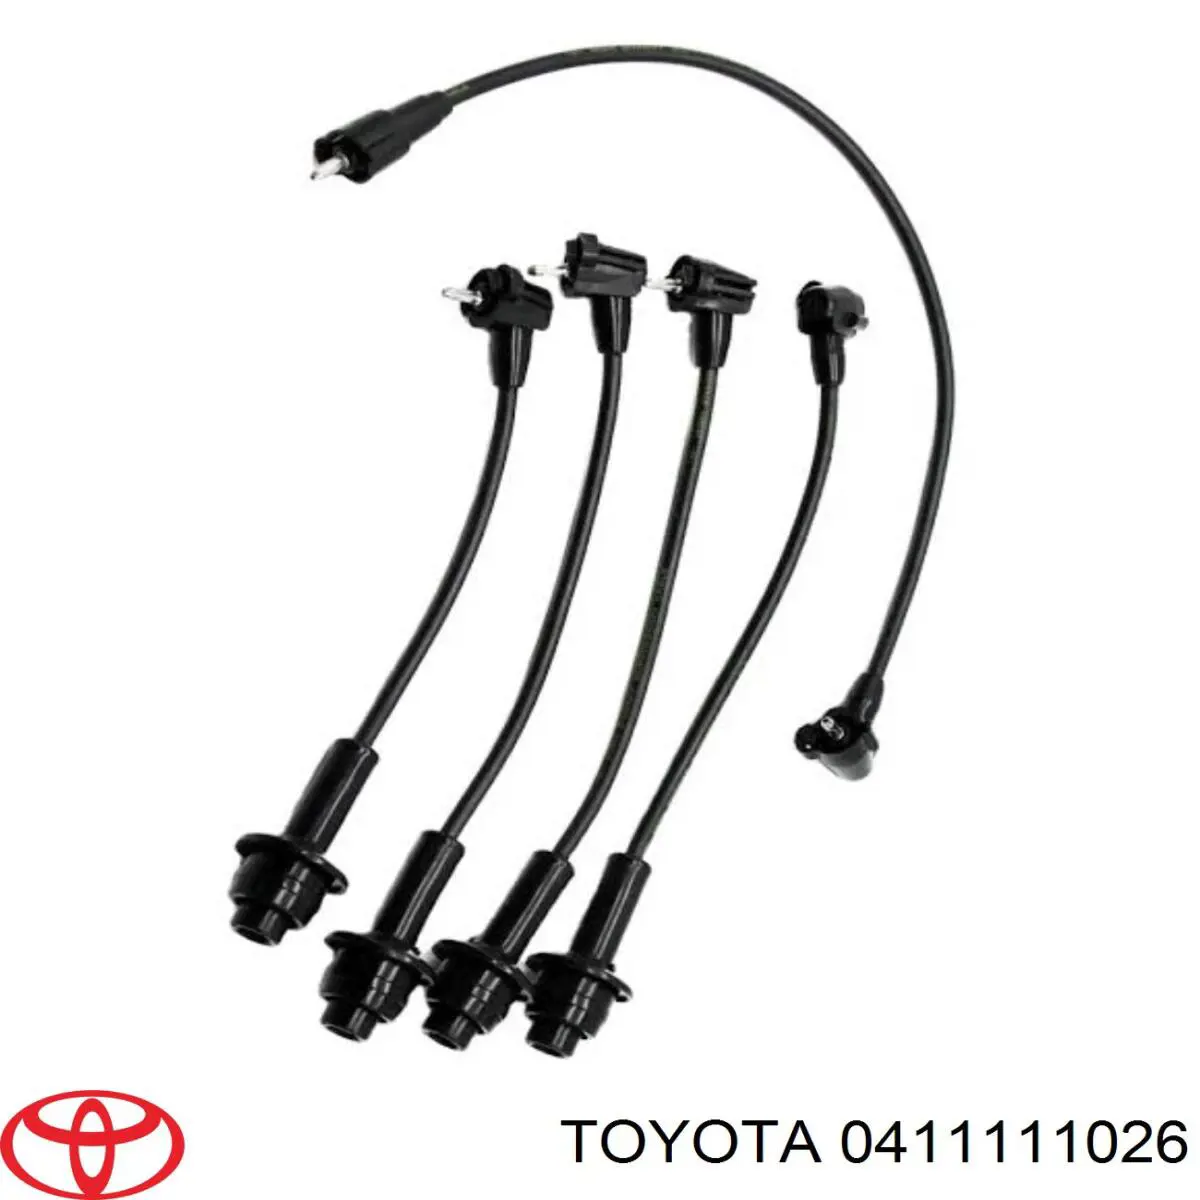 Kit completo de juntas del motor para Toyota Starlet (P7)